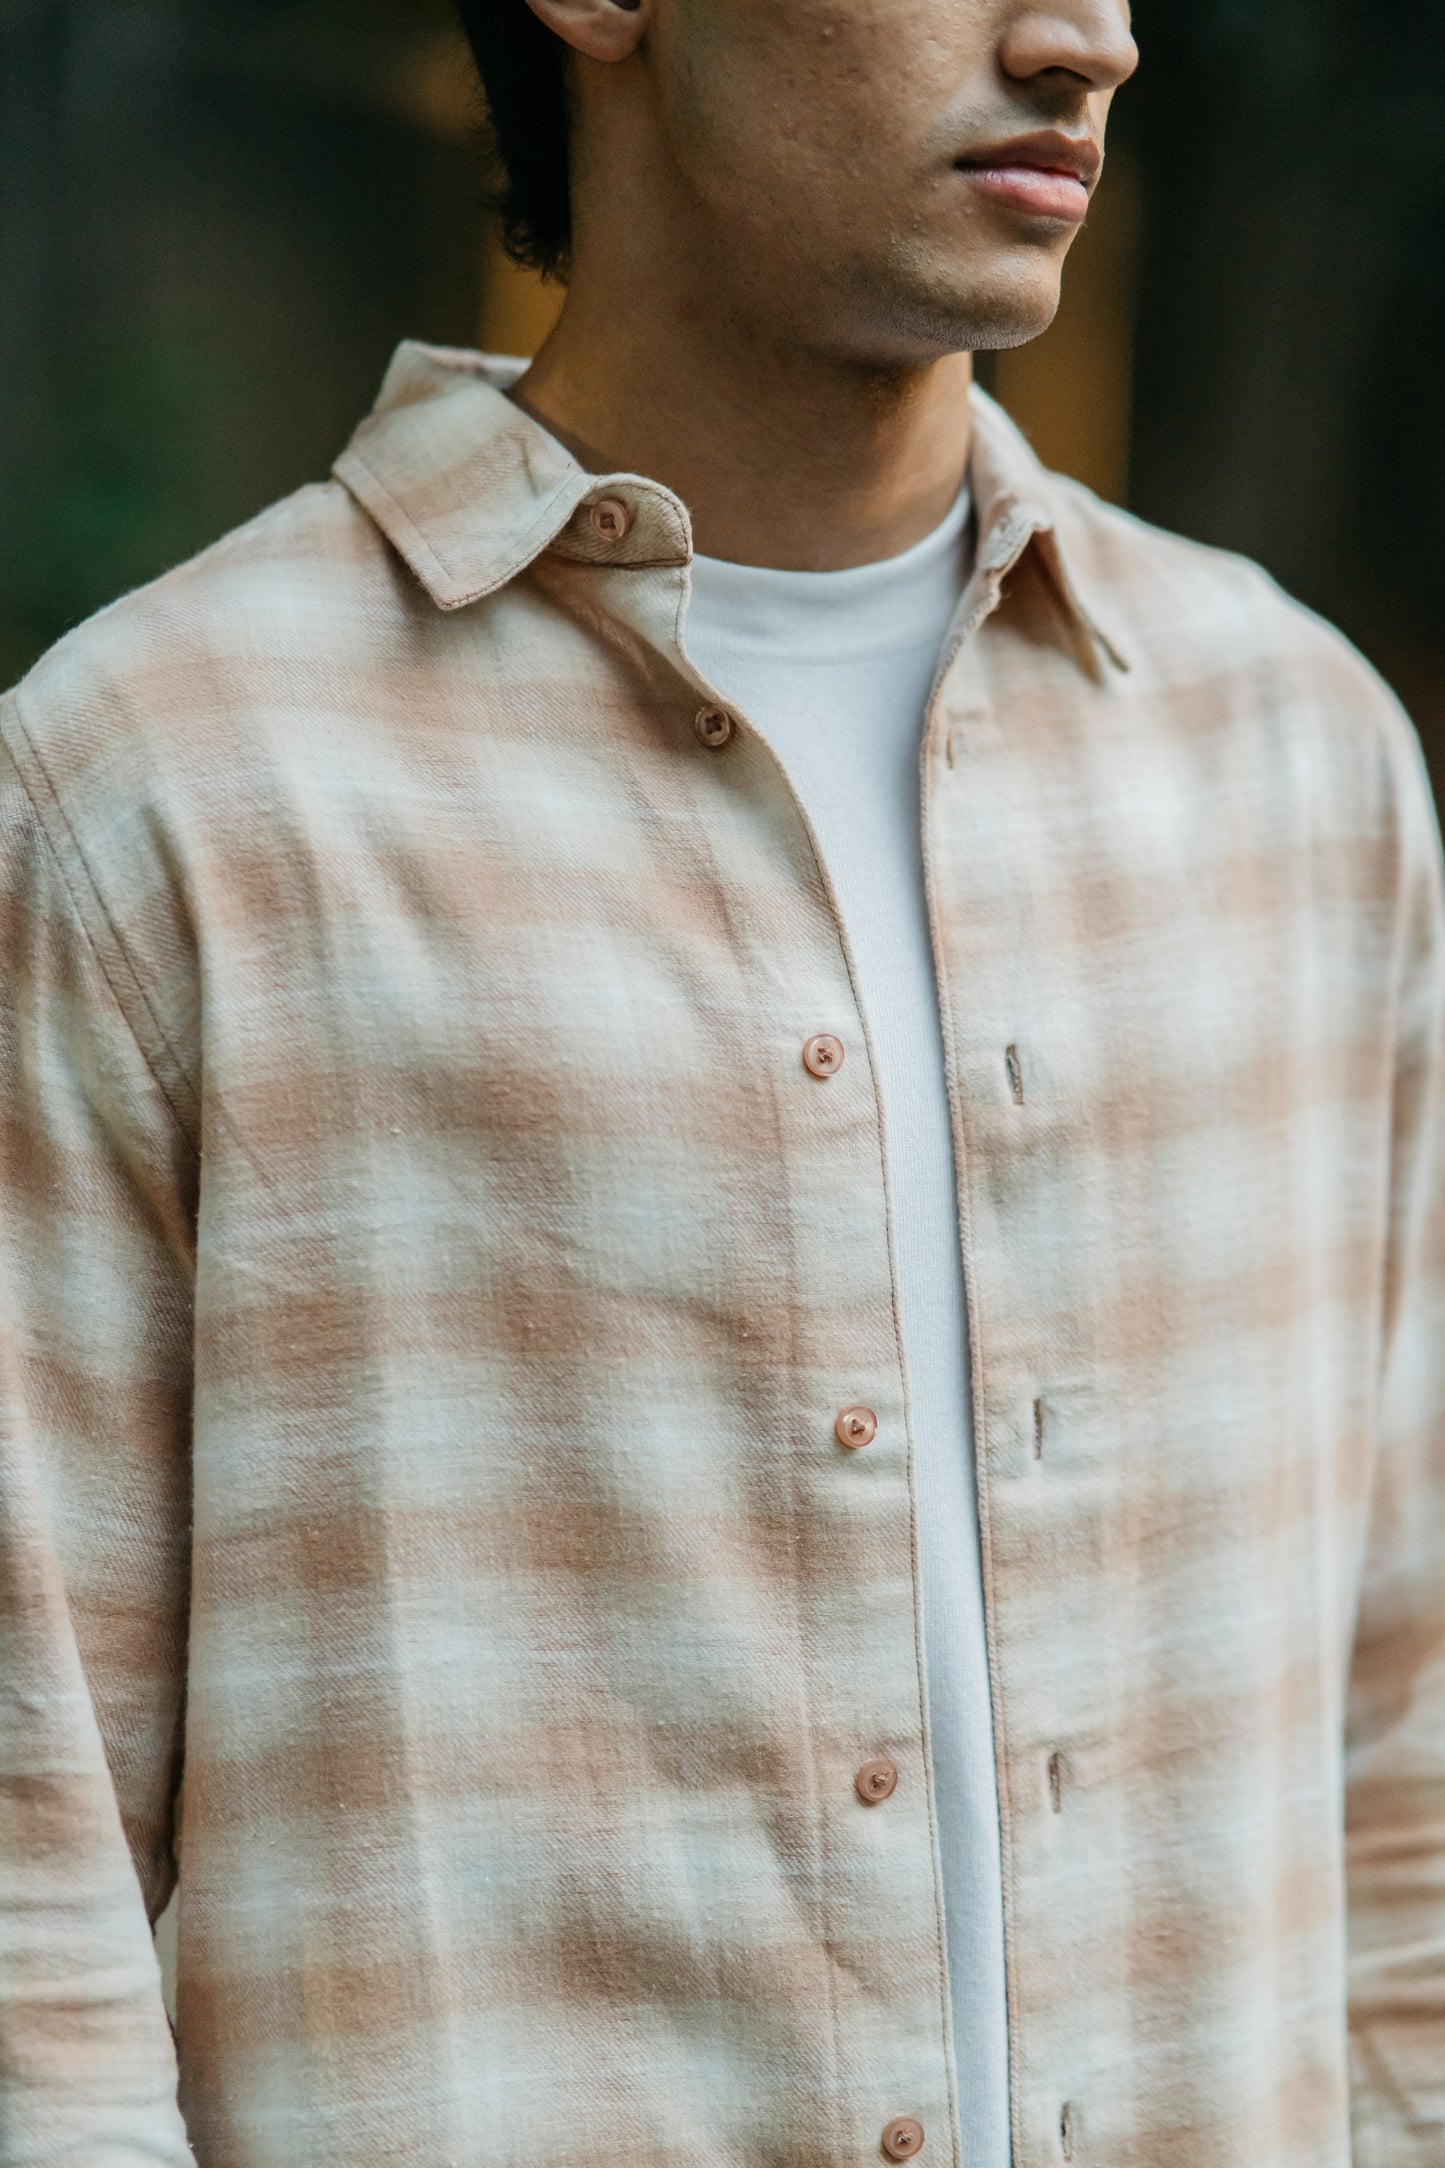 Flannel Shirt for Men - Beige & Off White